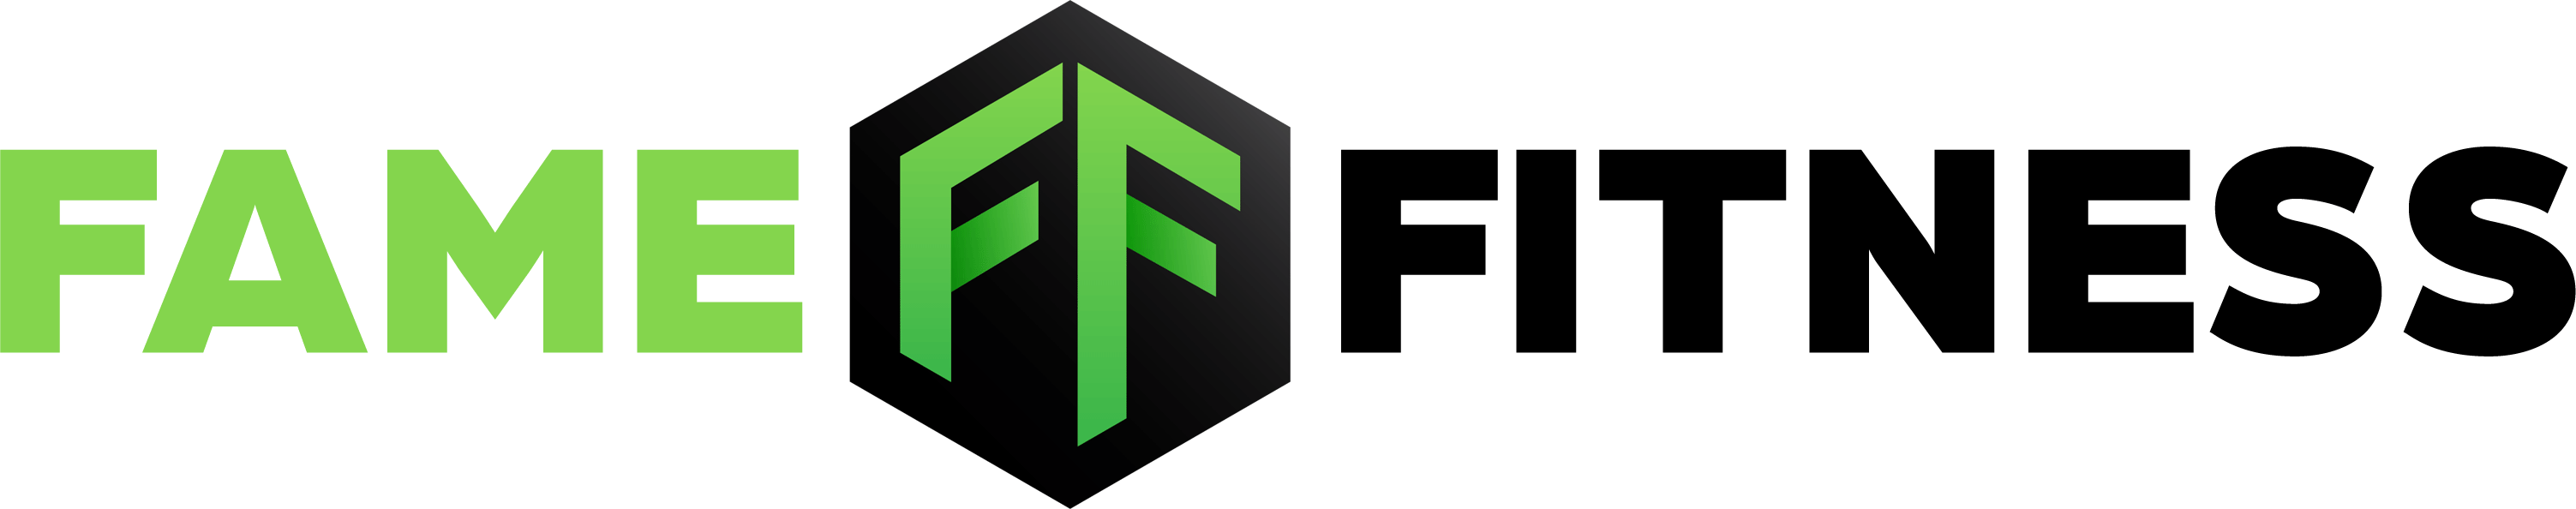 fame-fitness-logo-05-resized